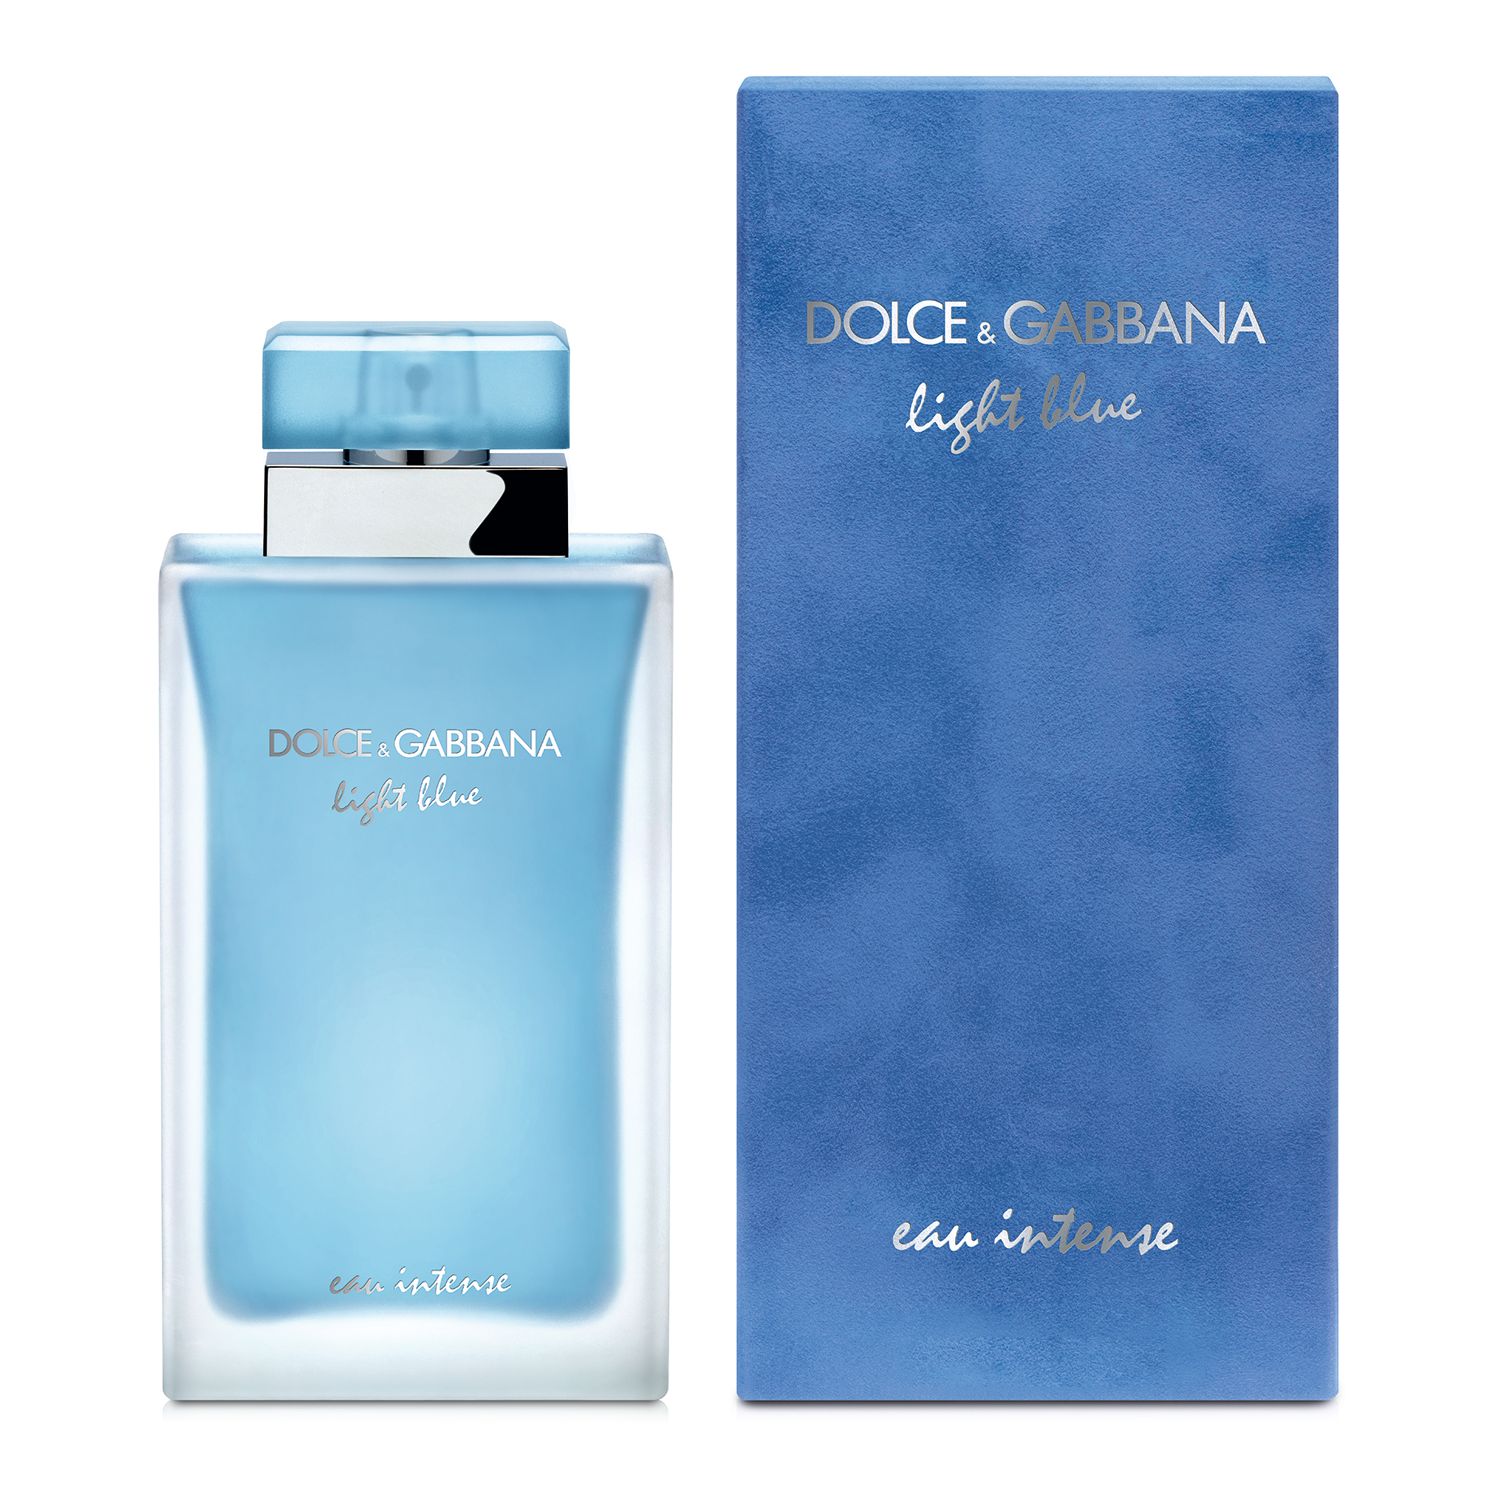 dolce and gabbana perfumes women